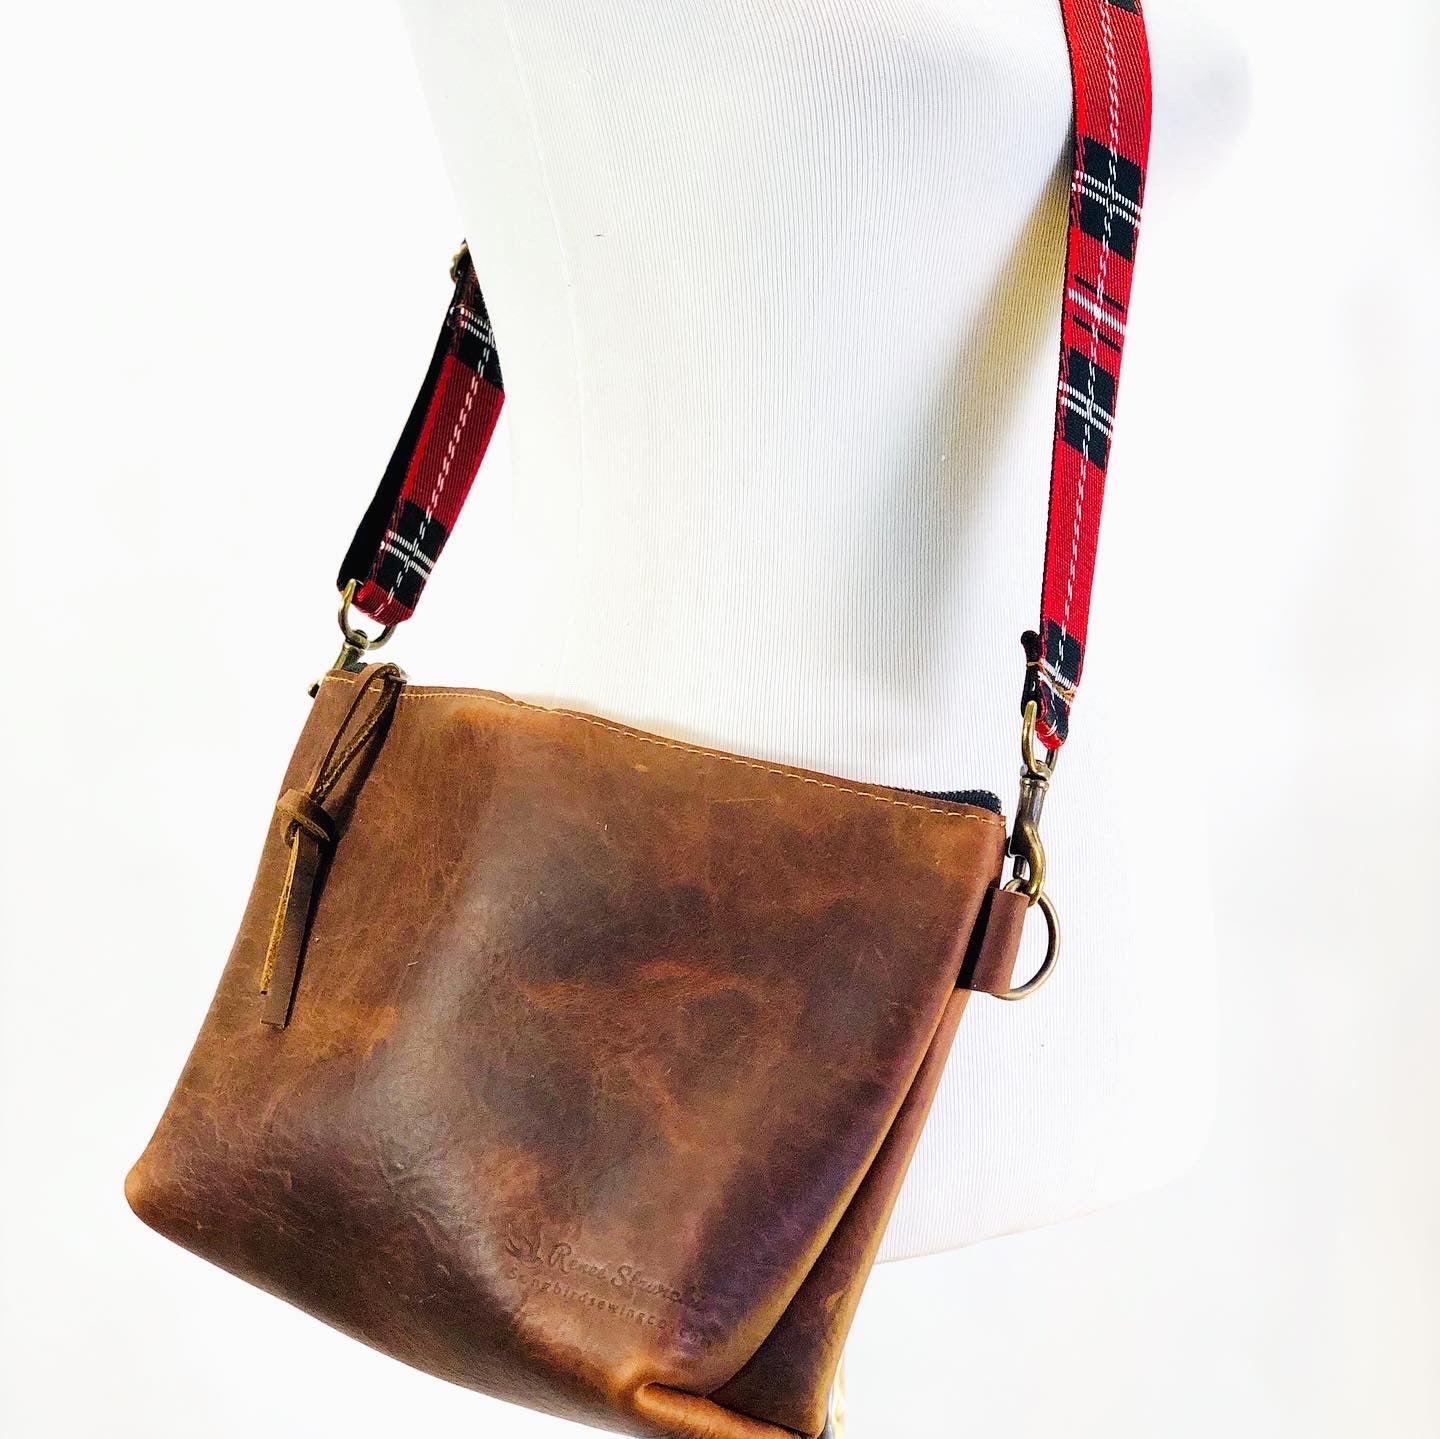 Medium Leather Bag - unlined